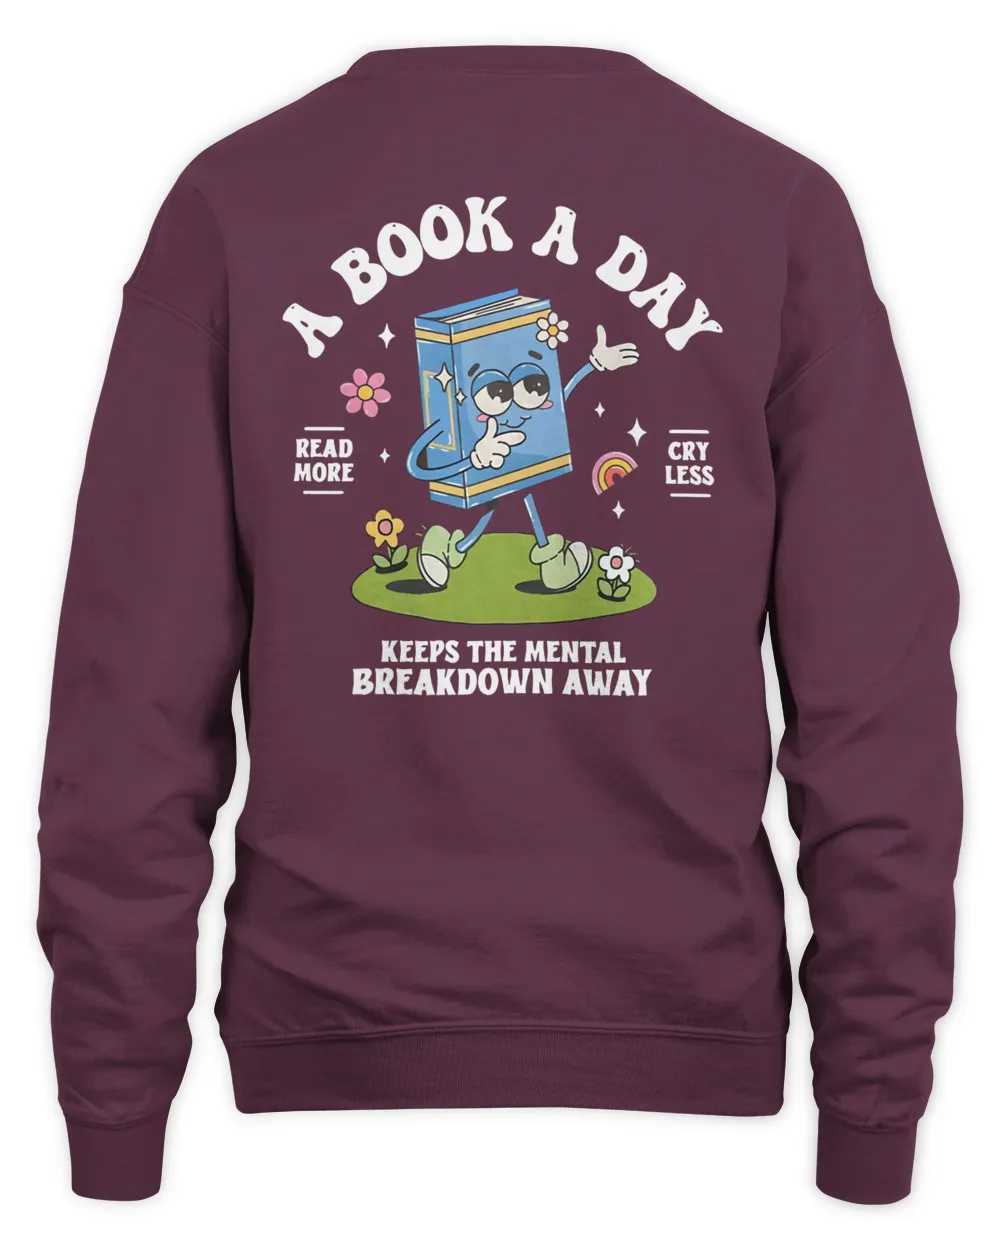 Read More Cry Less Sweatshirt, A Book A Day Shirt, Book Aesthetic Crewneck, Mental Health Sweatshirt